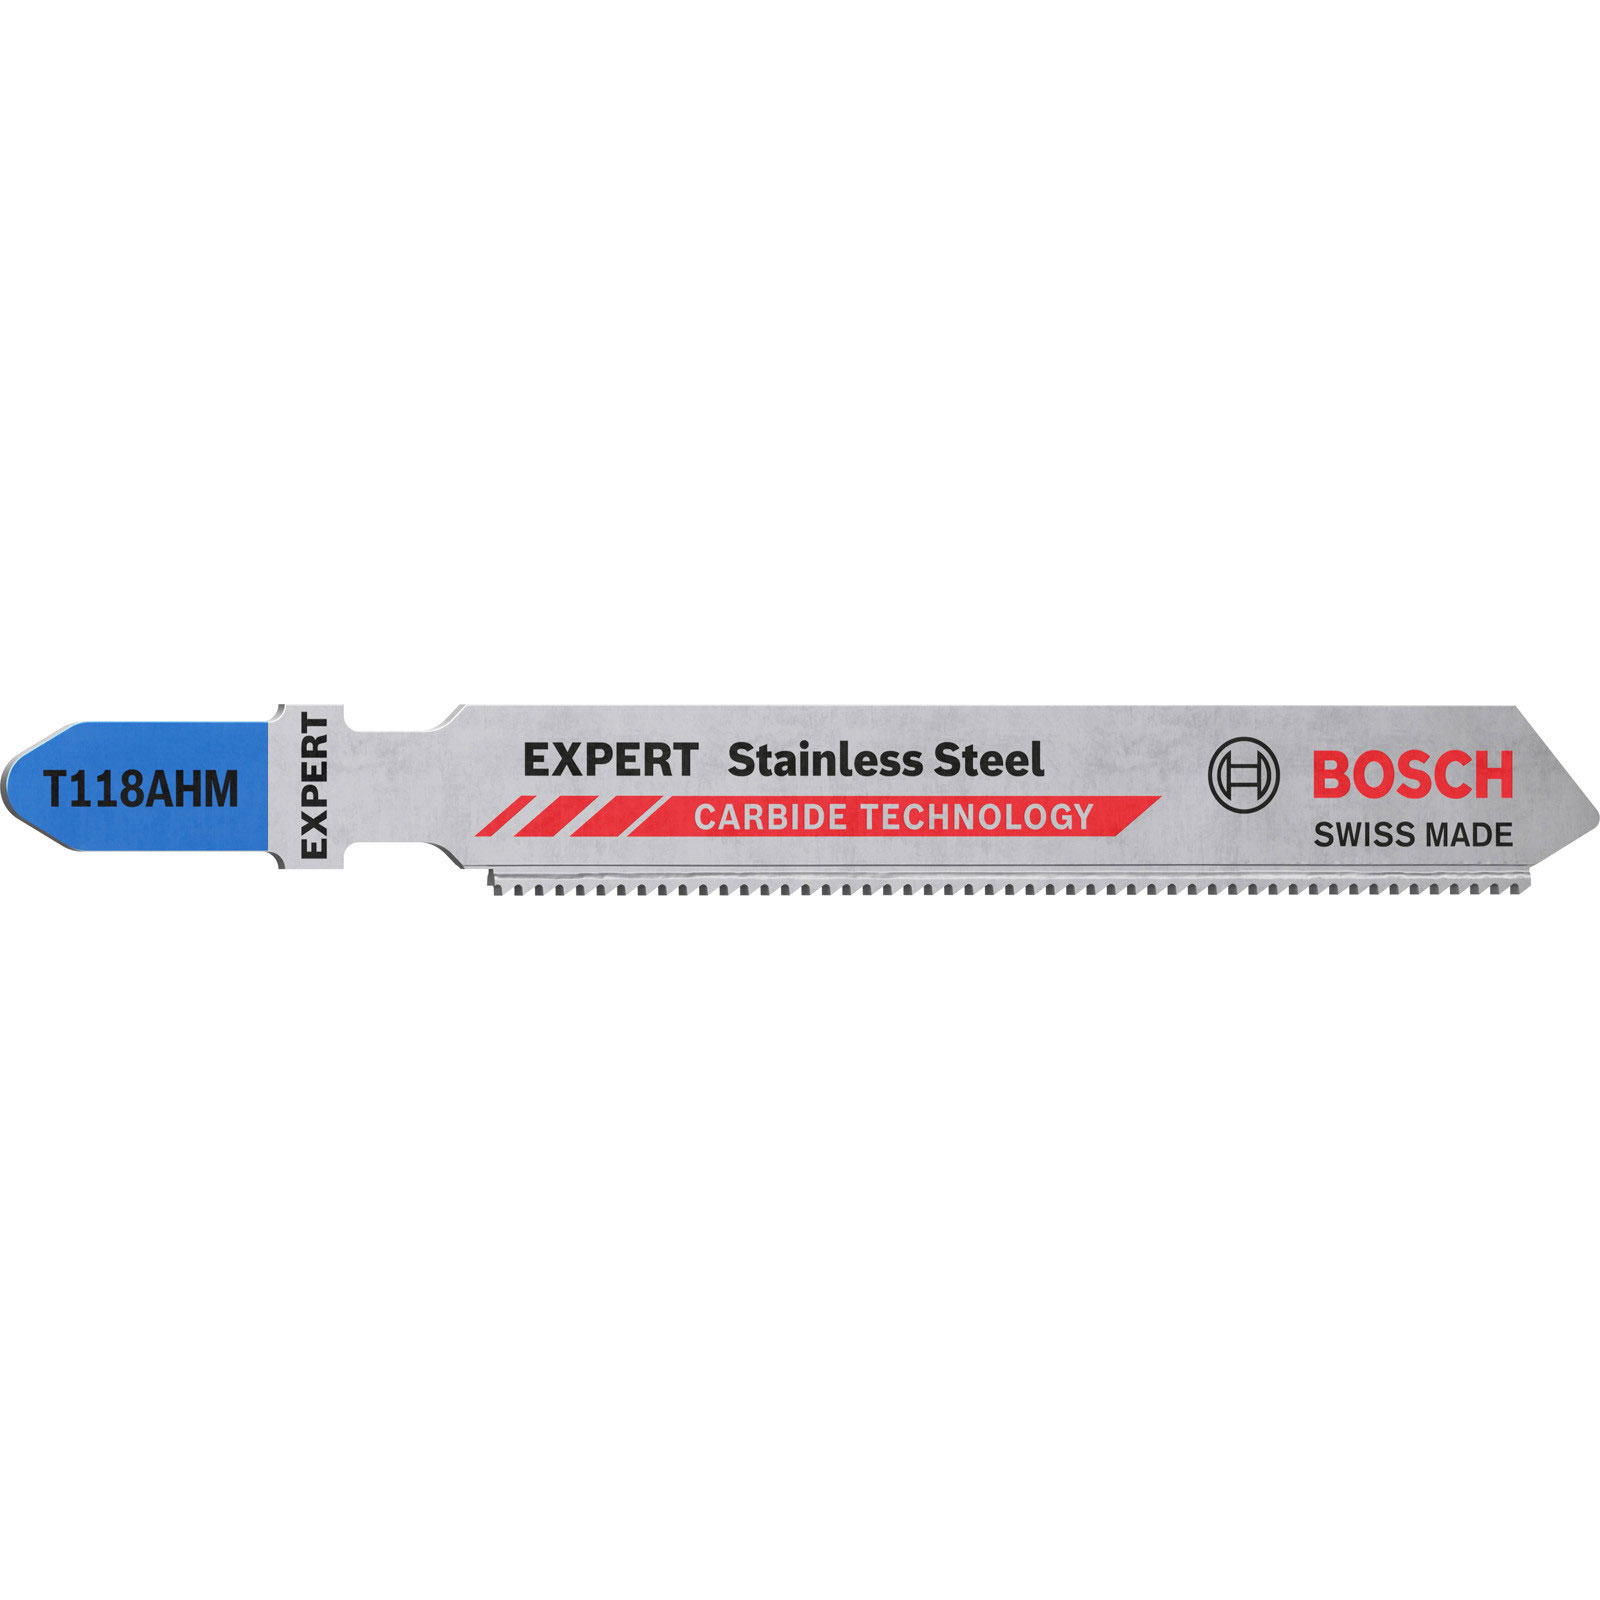 Bosch Professional Expert Stainless Steel T 118 AHM Stichsaegeblatt, 3 Stueck. Fuer Stichsaegen